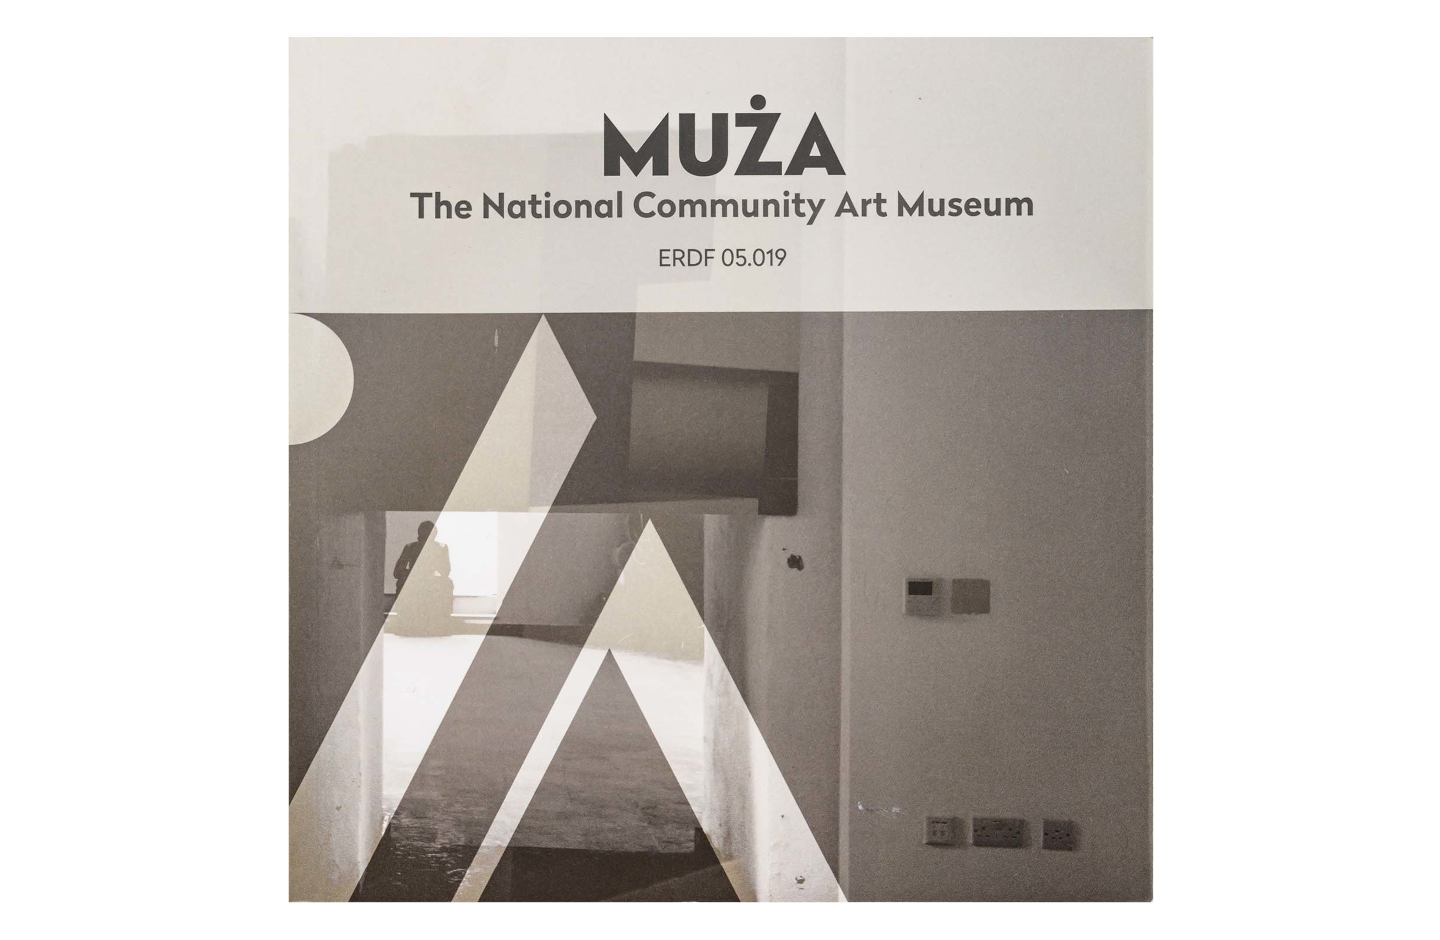 MUZA: The National Community Art Museum